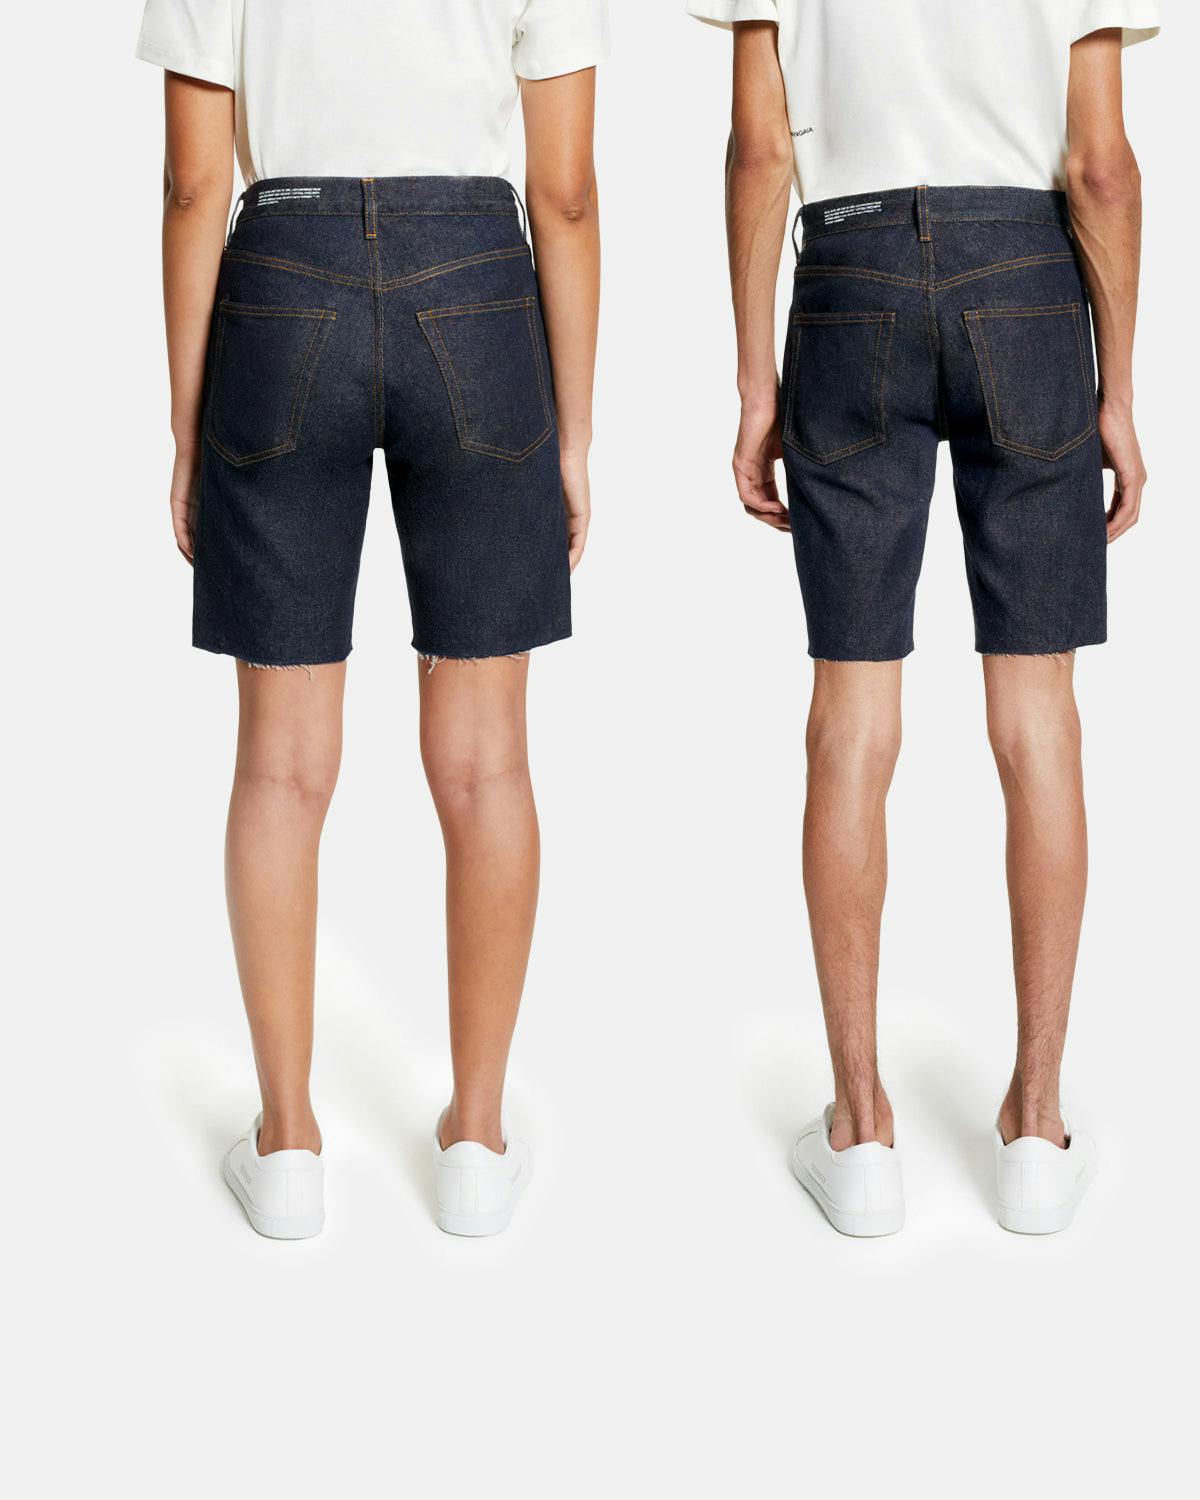 VEGO Dry fit Shorts for Men, Bermuda,Trousers, Half Pant 